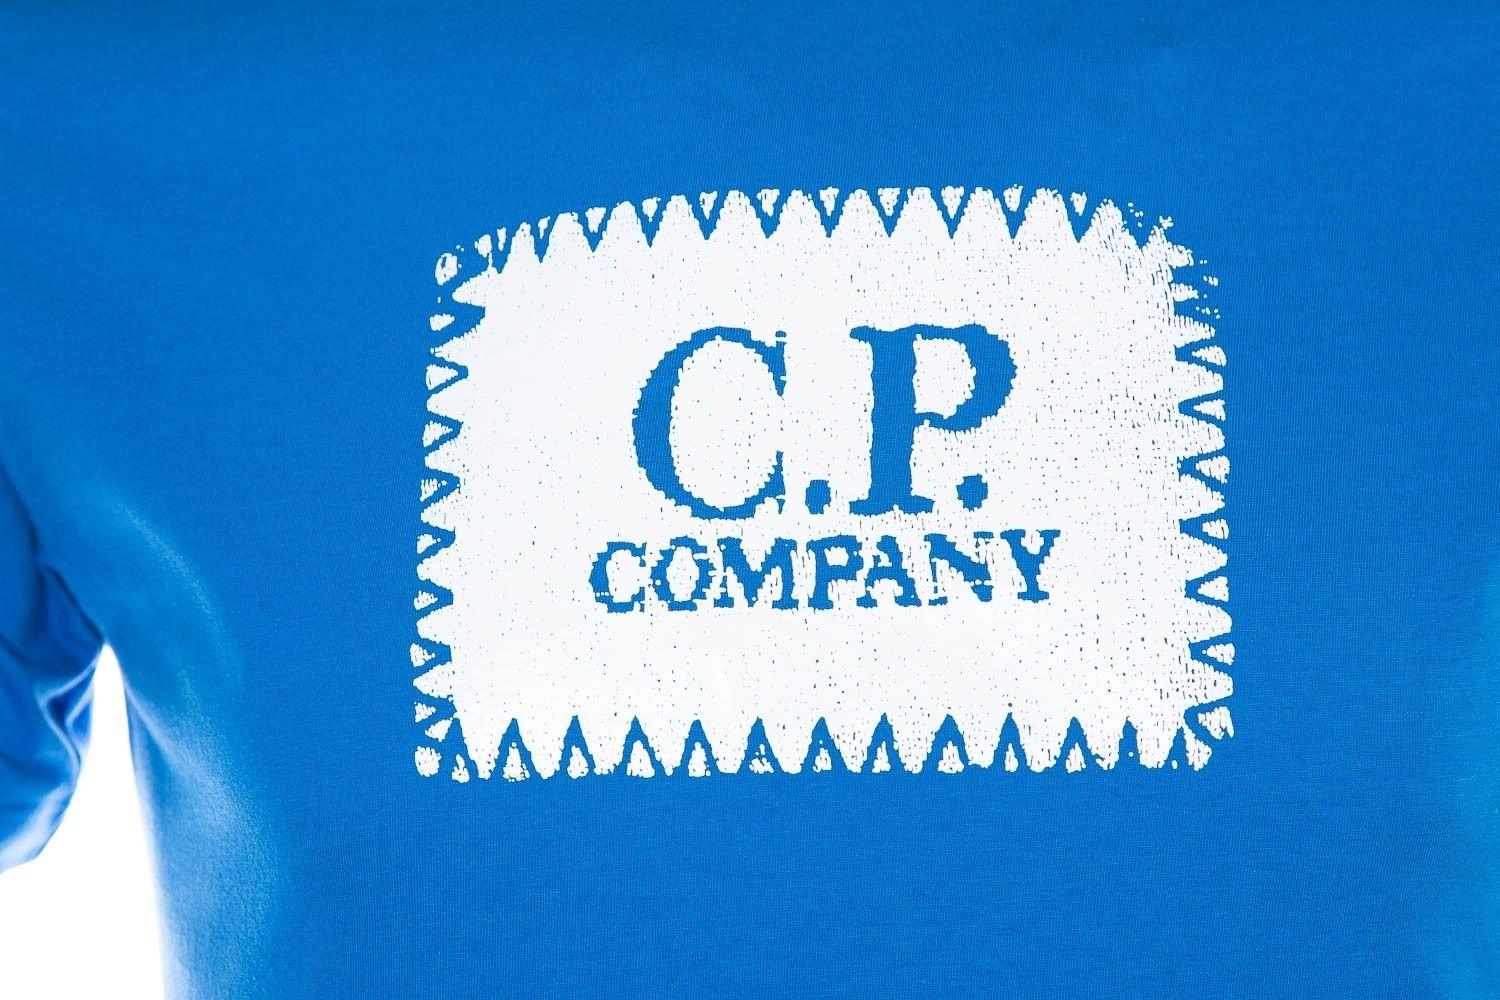 Co Blue Box Logo - CP Company Box Logo T Shirt in Blue I CP Company I Norton Barrie